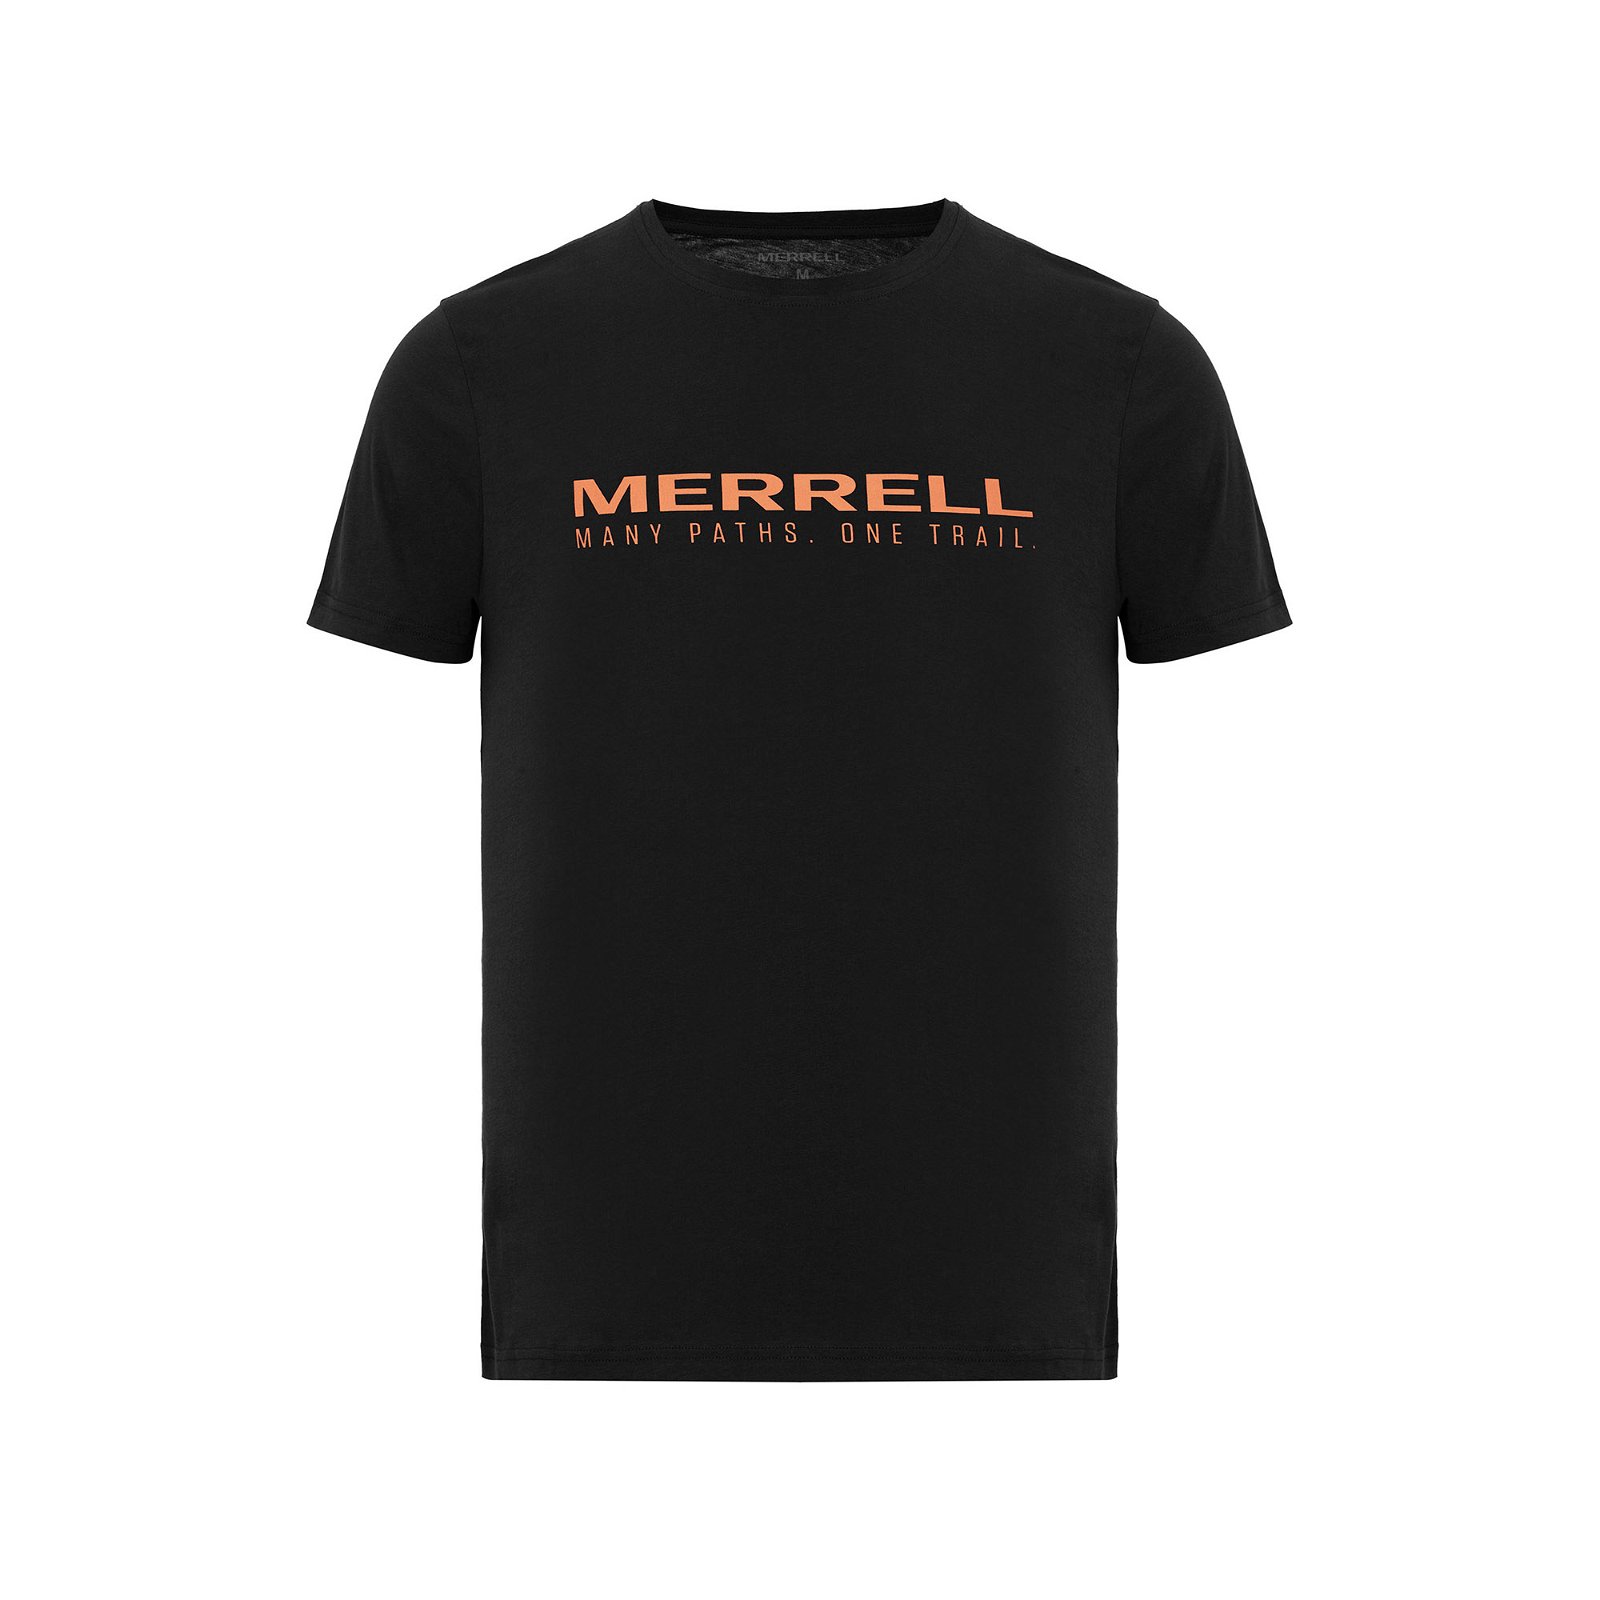 Merrell Title Erkek Koşu Tişört - Siyah - 1